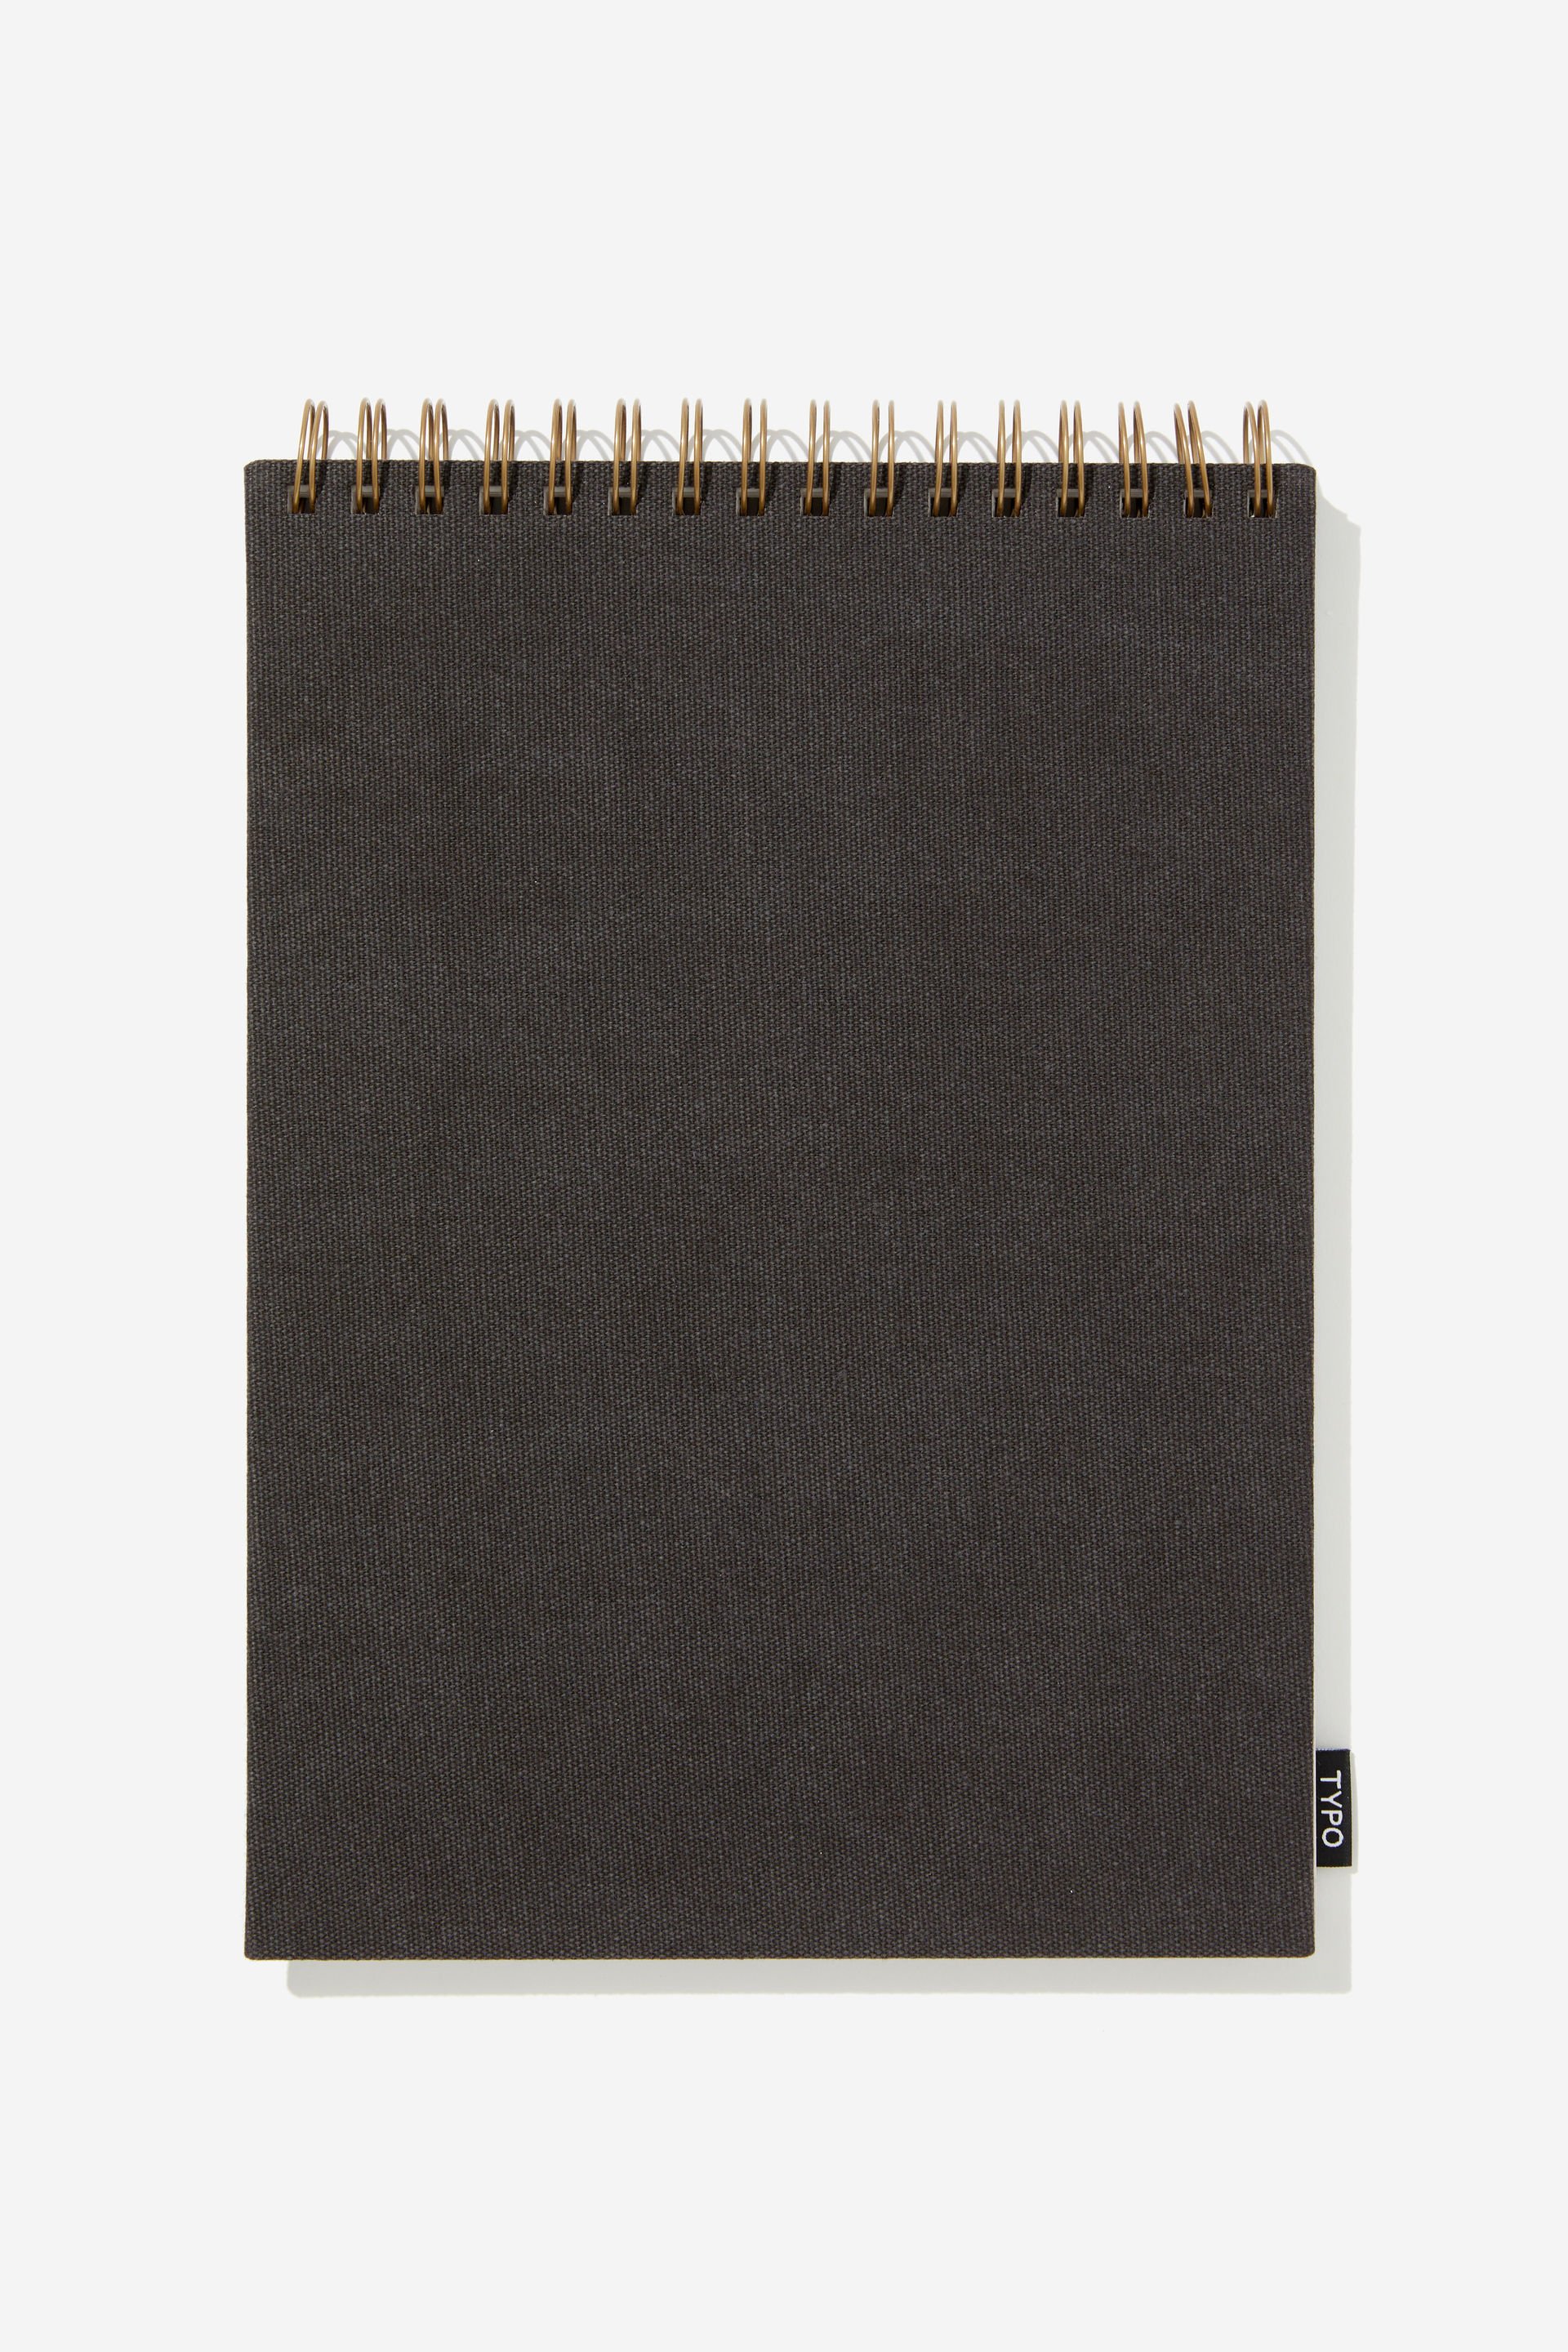 Typo - A4 Spiral Sketch Book - Black